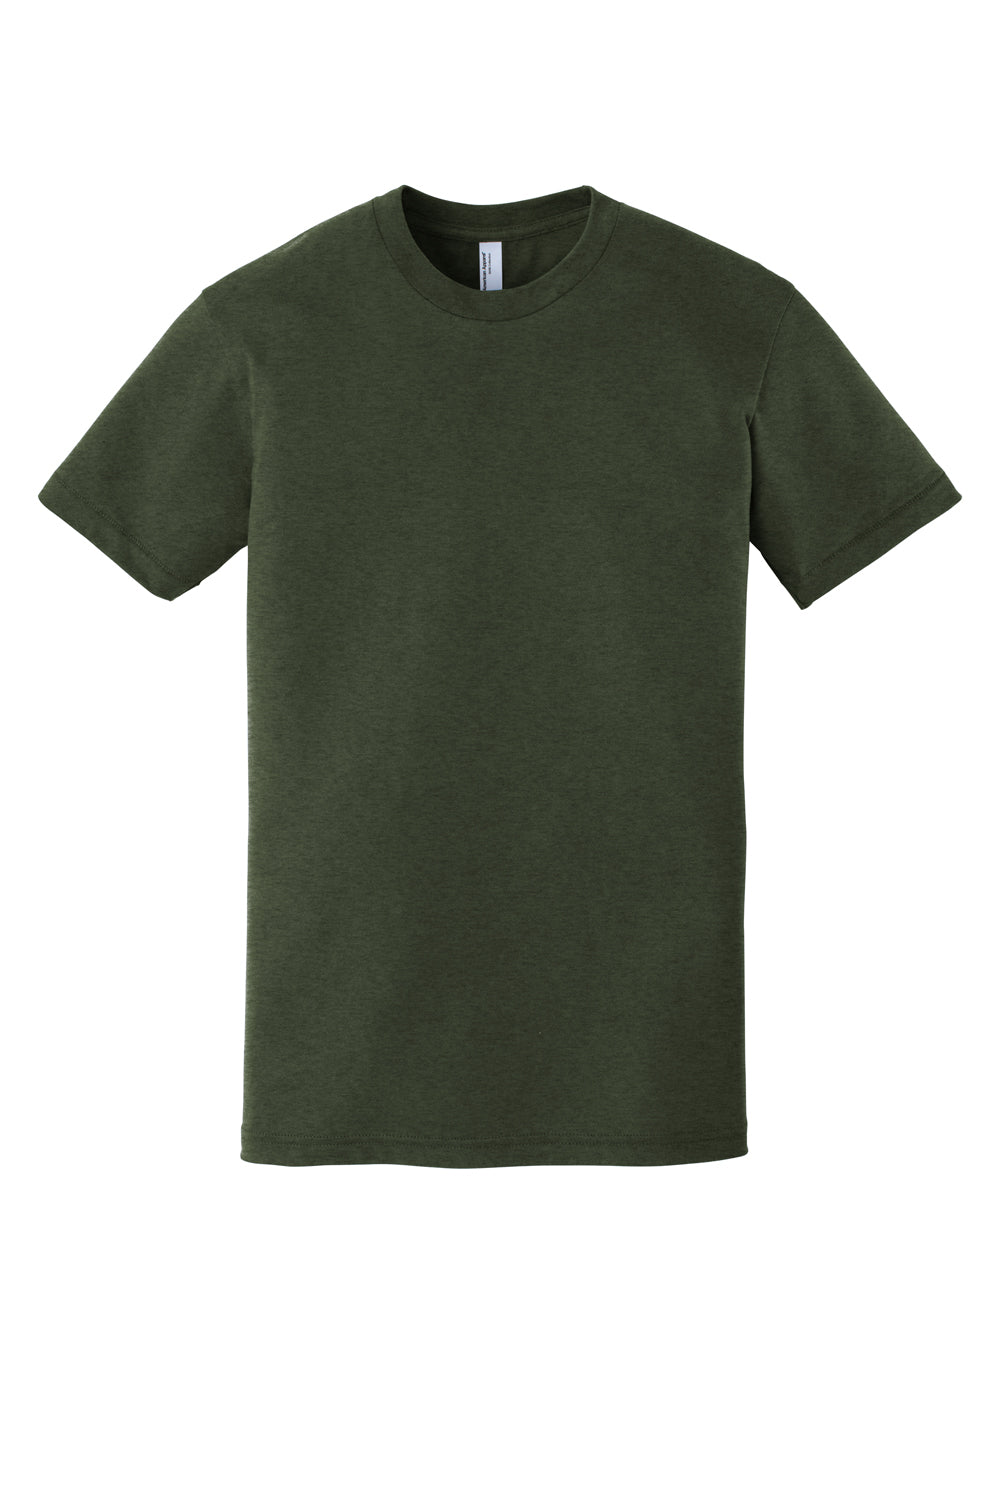 American Apparel BB401W Mens Short Sleeve Crewneck T-Shirt Heather Lieutenant Green Flat Front